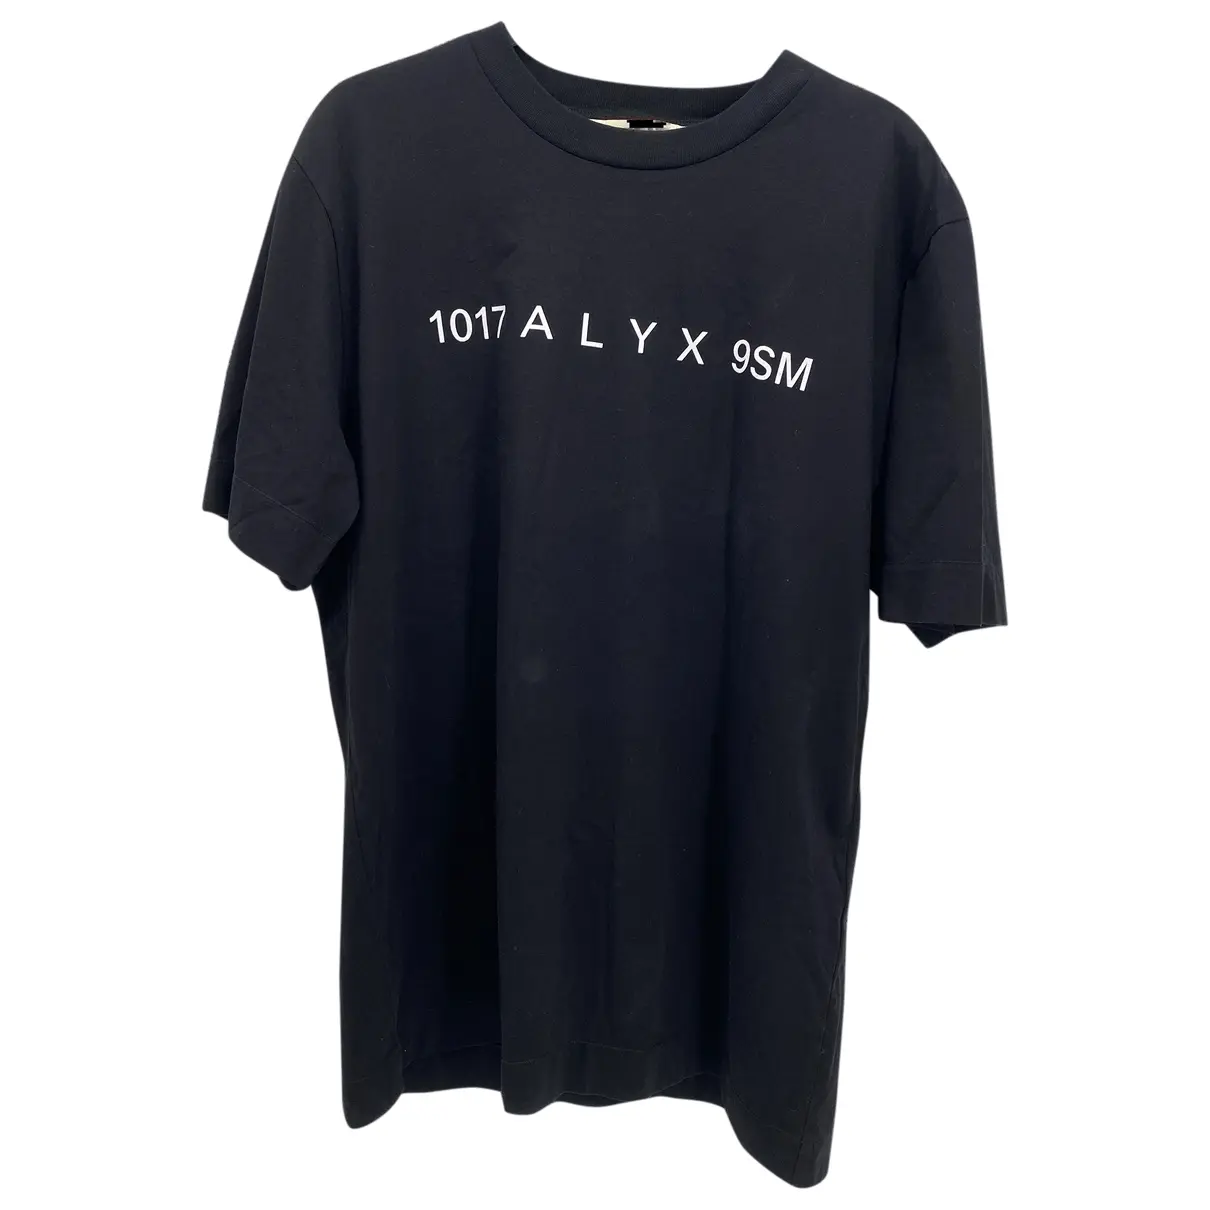 T-shirt 1017 ALYX 9SM